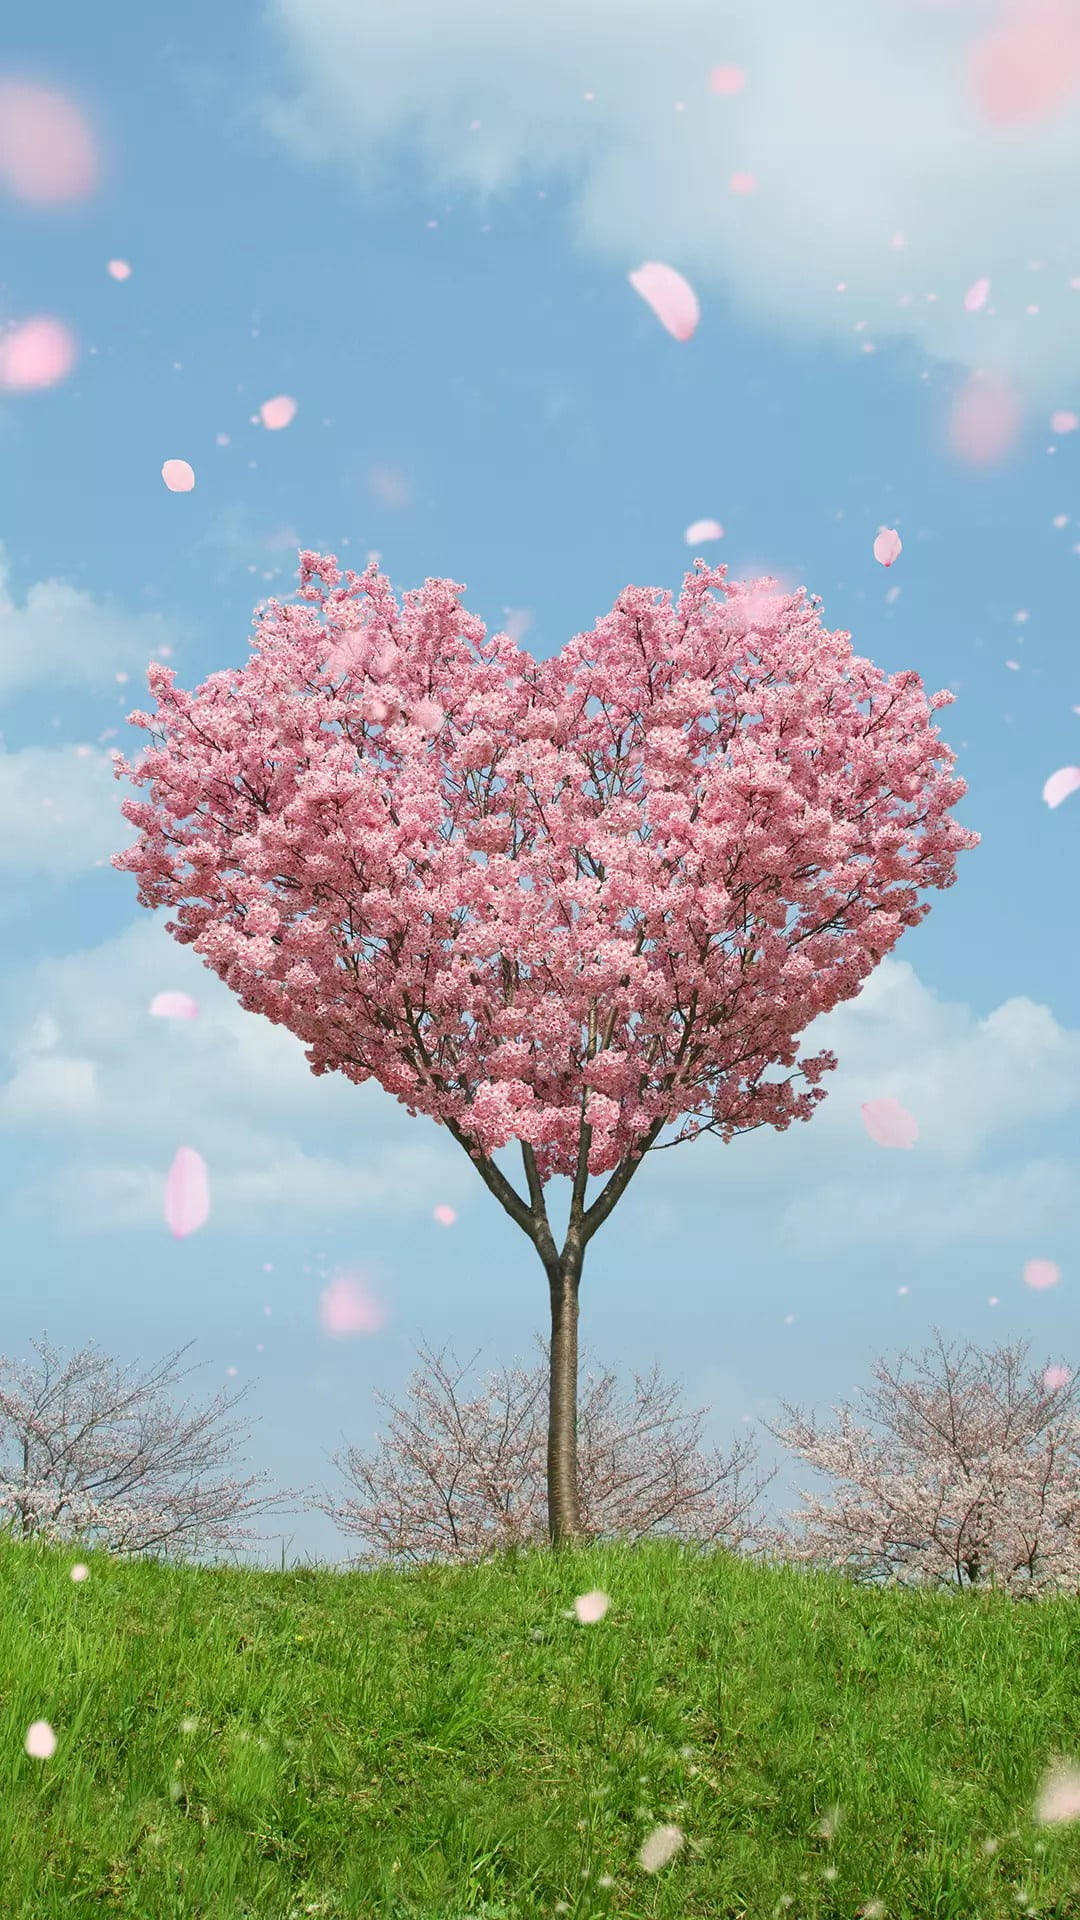 Pink Heart Tree